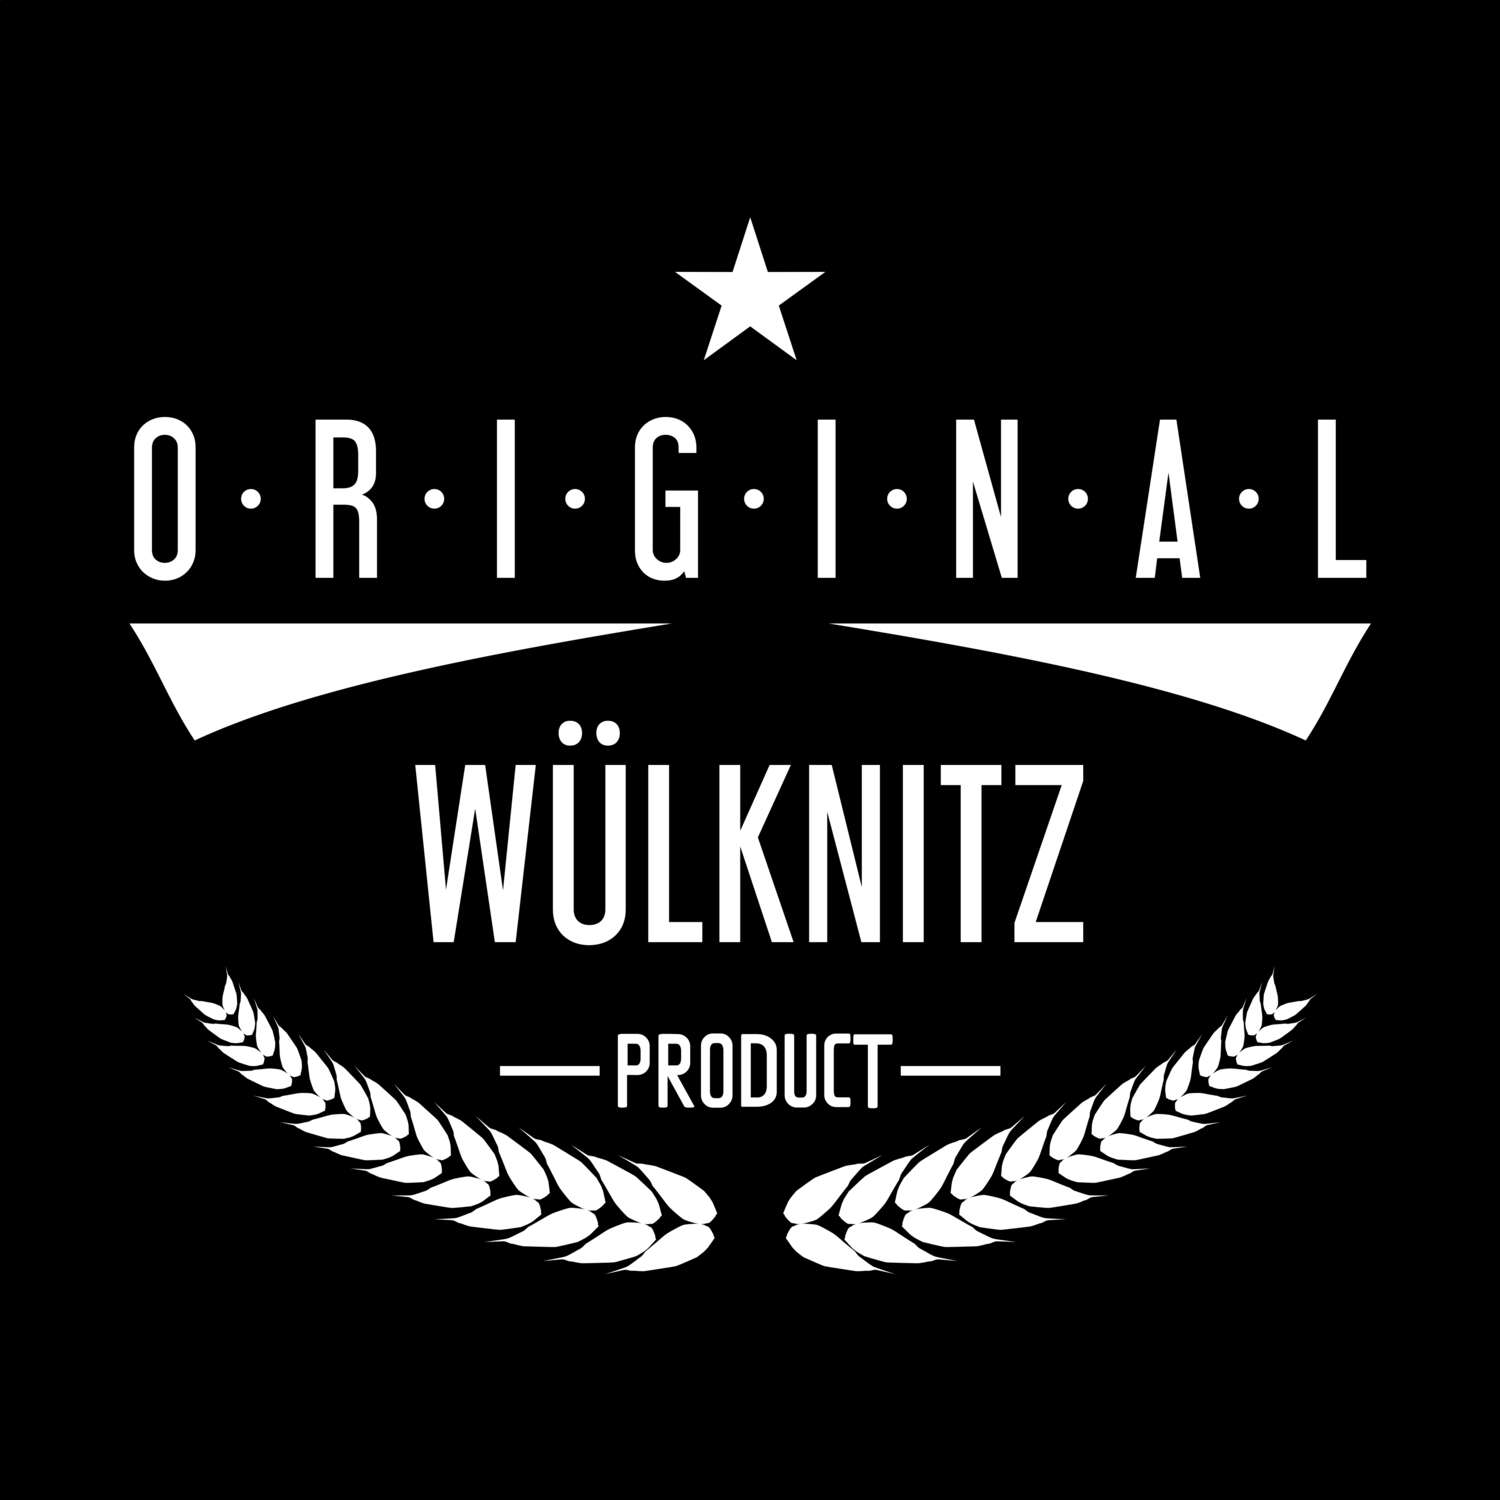 Wülknitz T-Shirt »Original Product«